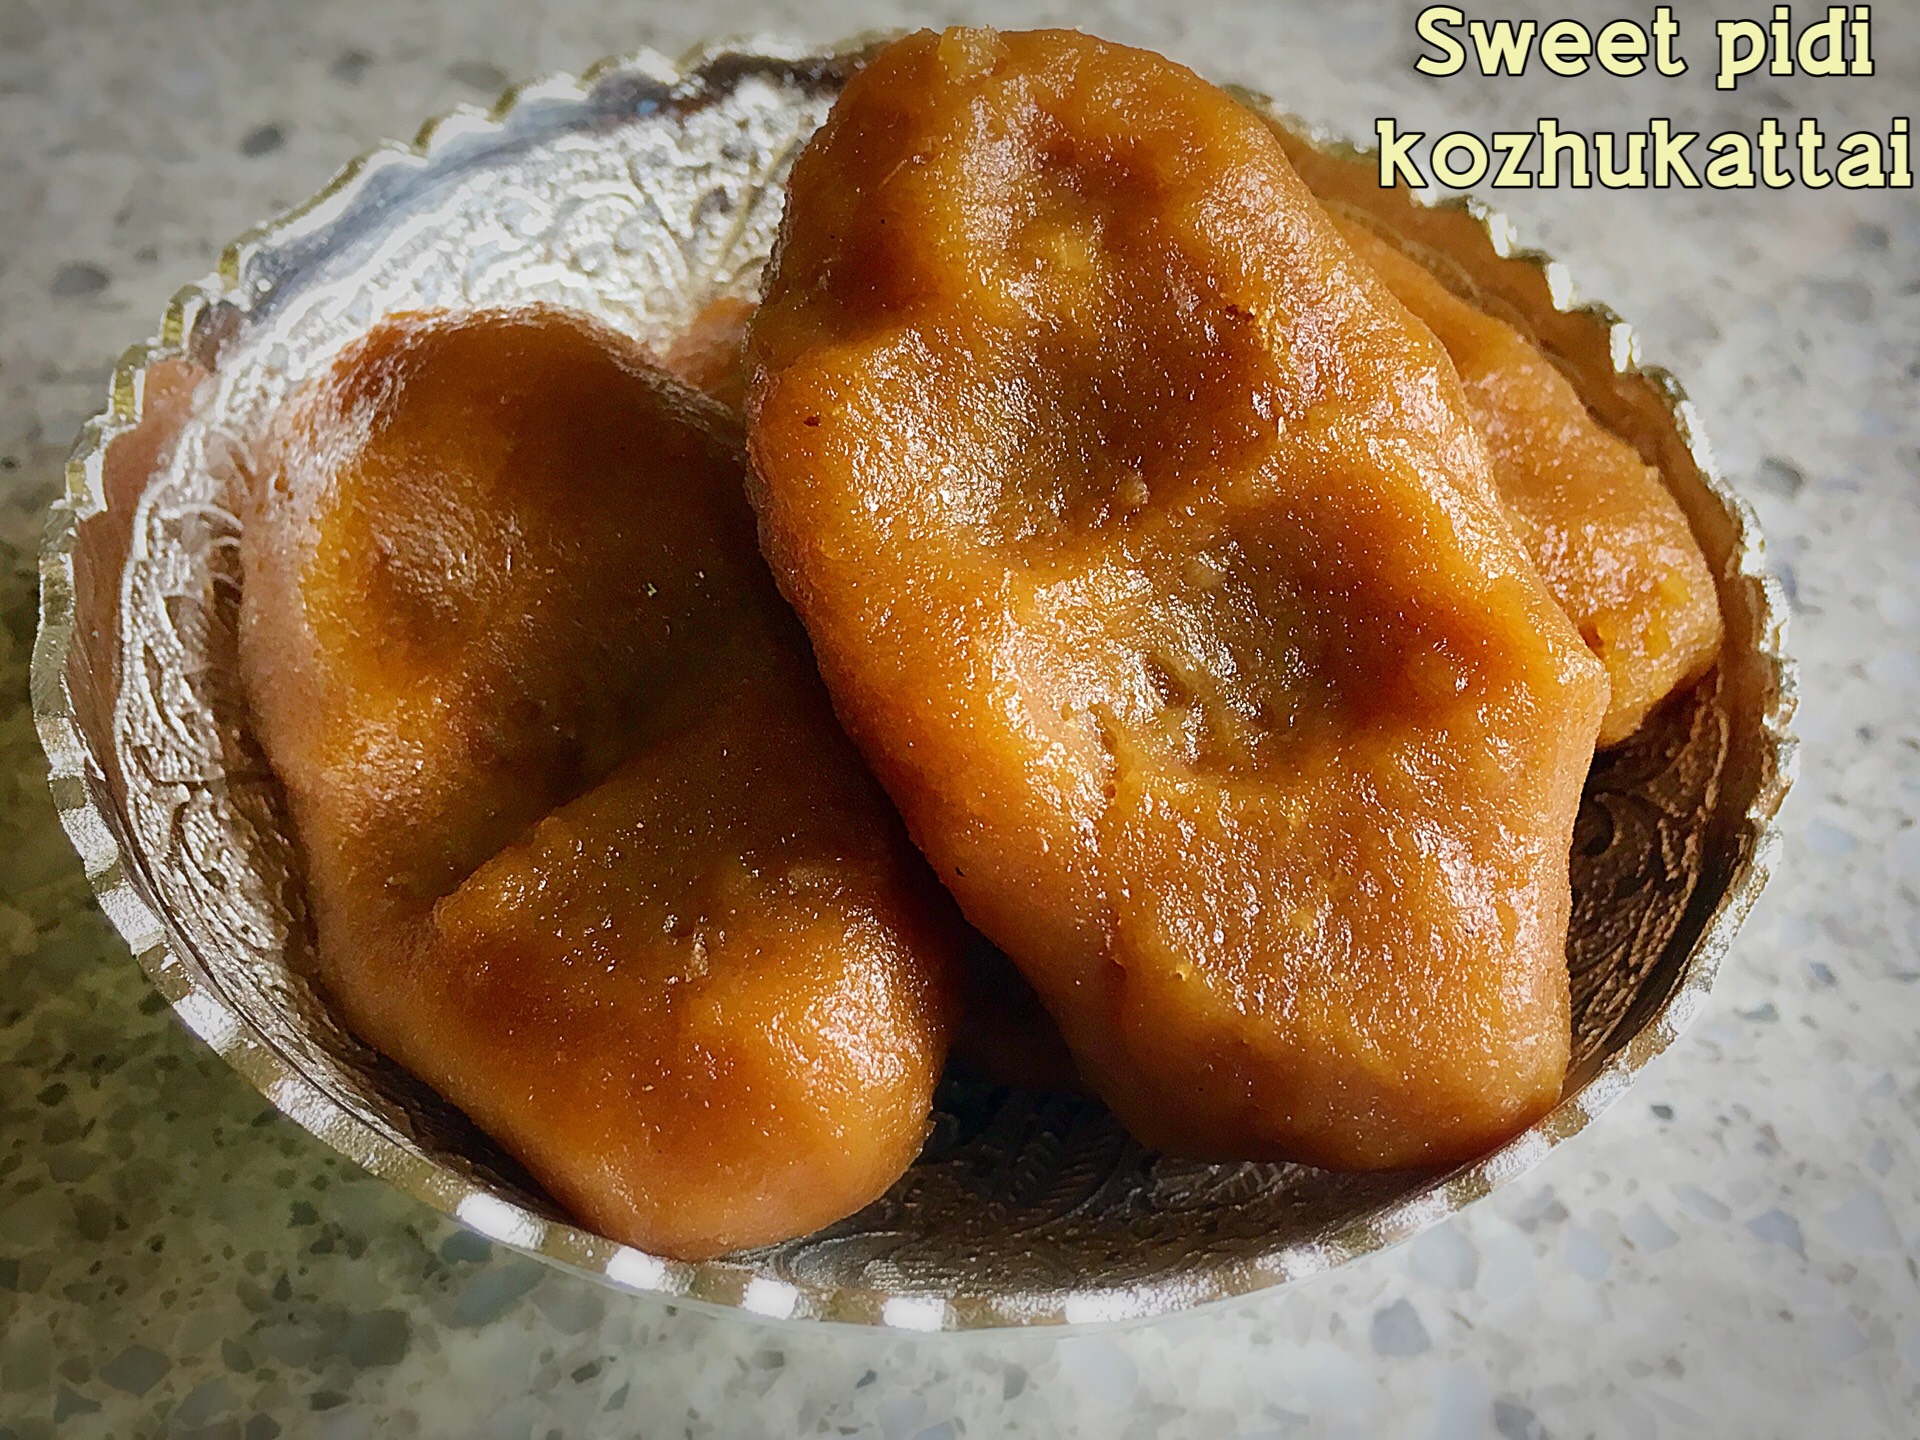 sweet,snacks,kozhukattai,sweet kozhukattai,kozhukattai sweet,indian sweets,sweets in india,prasadam for good,vinayaga chathurthi sweets,jaggery kozhukattai,rice flour kozhukattai,festival,indian festival recipe,sweet recipe,south indian sweet,south indian kozhukattai,pidi kozhukattai